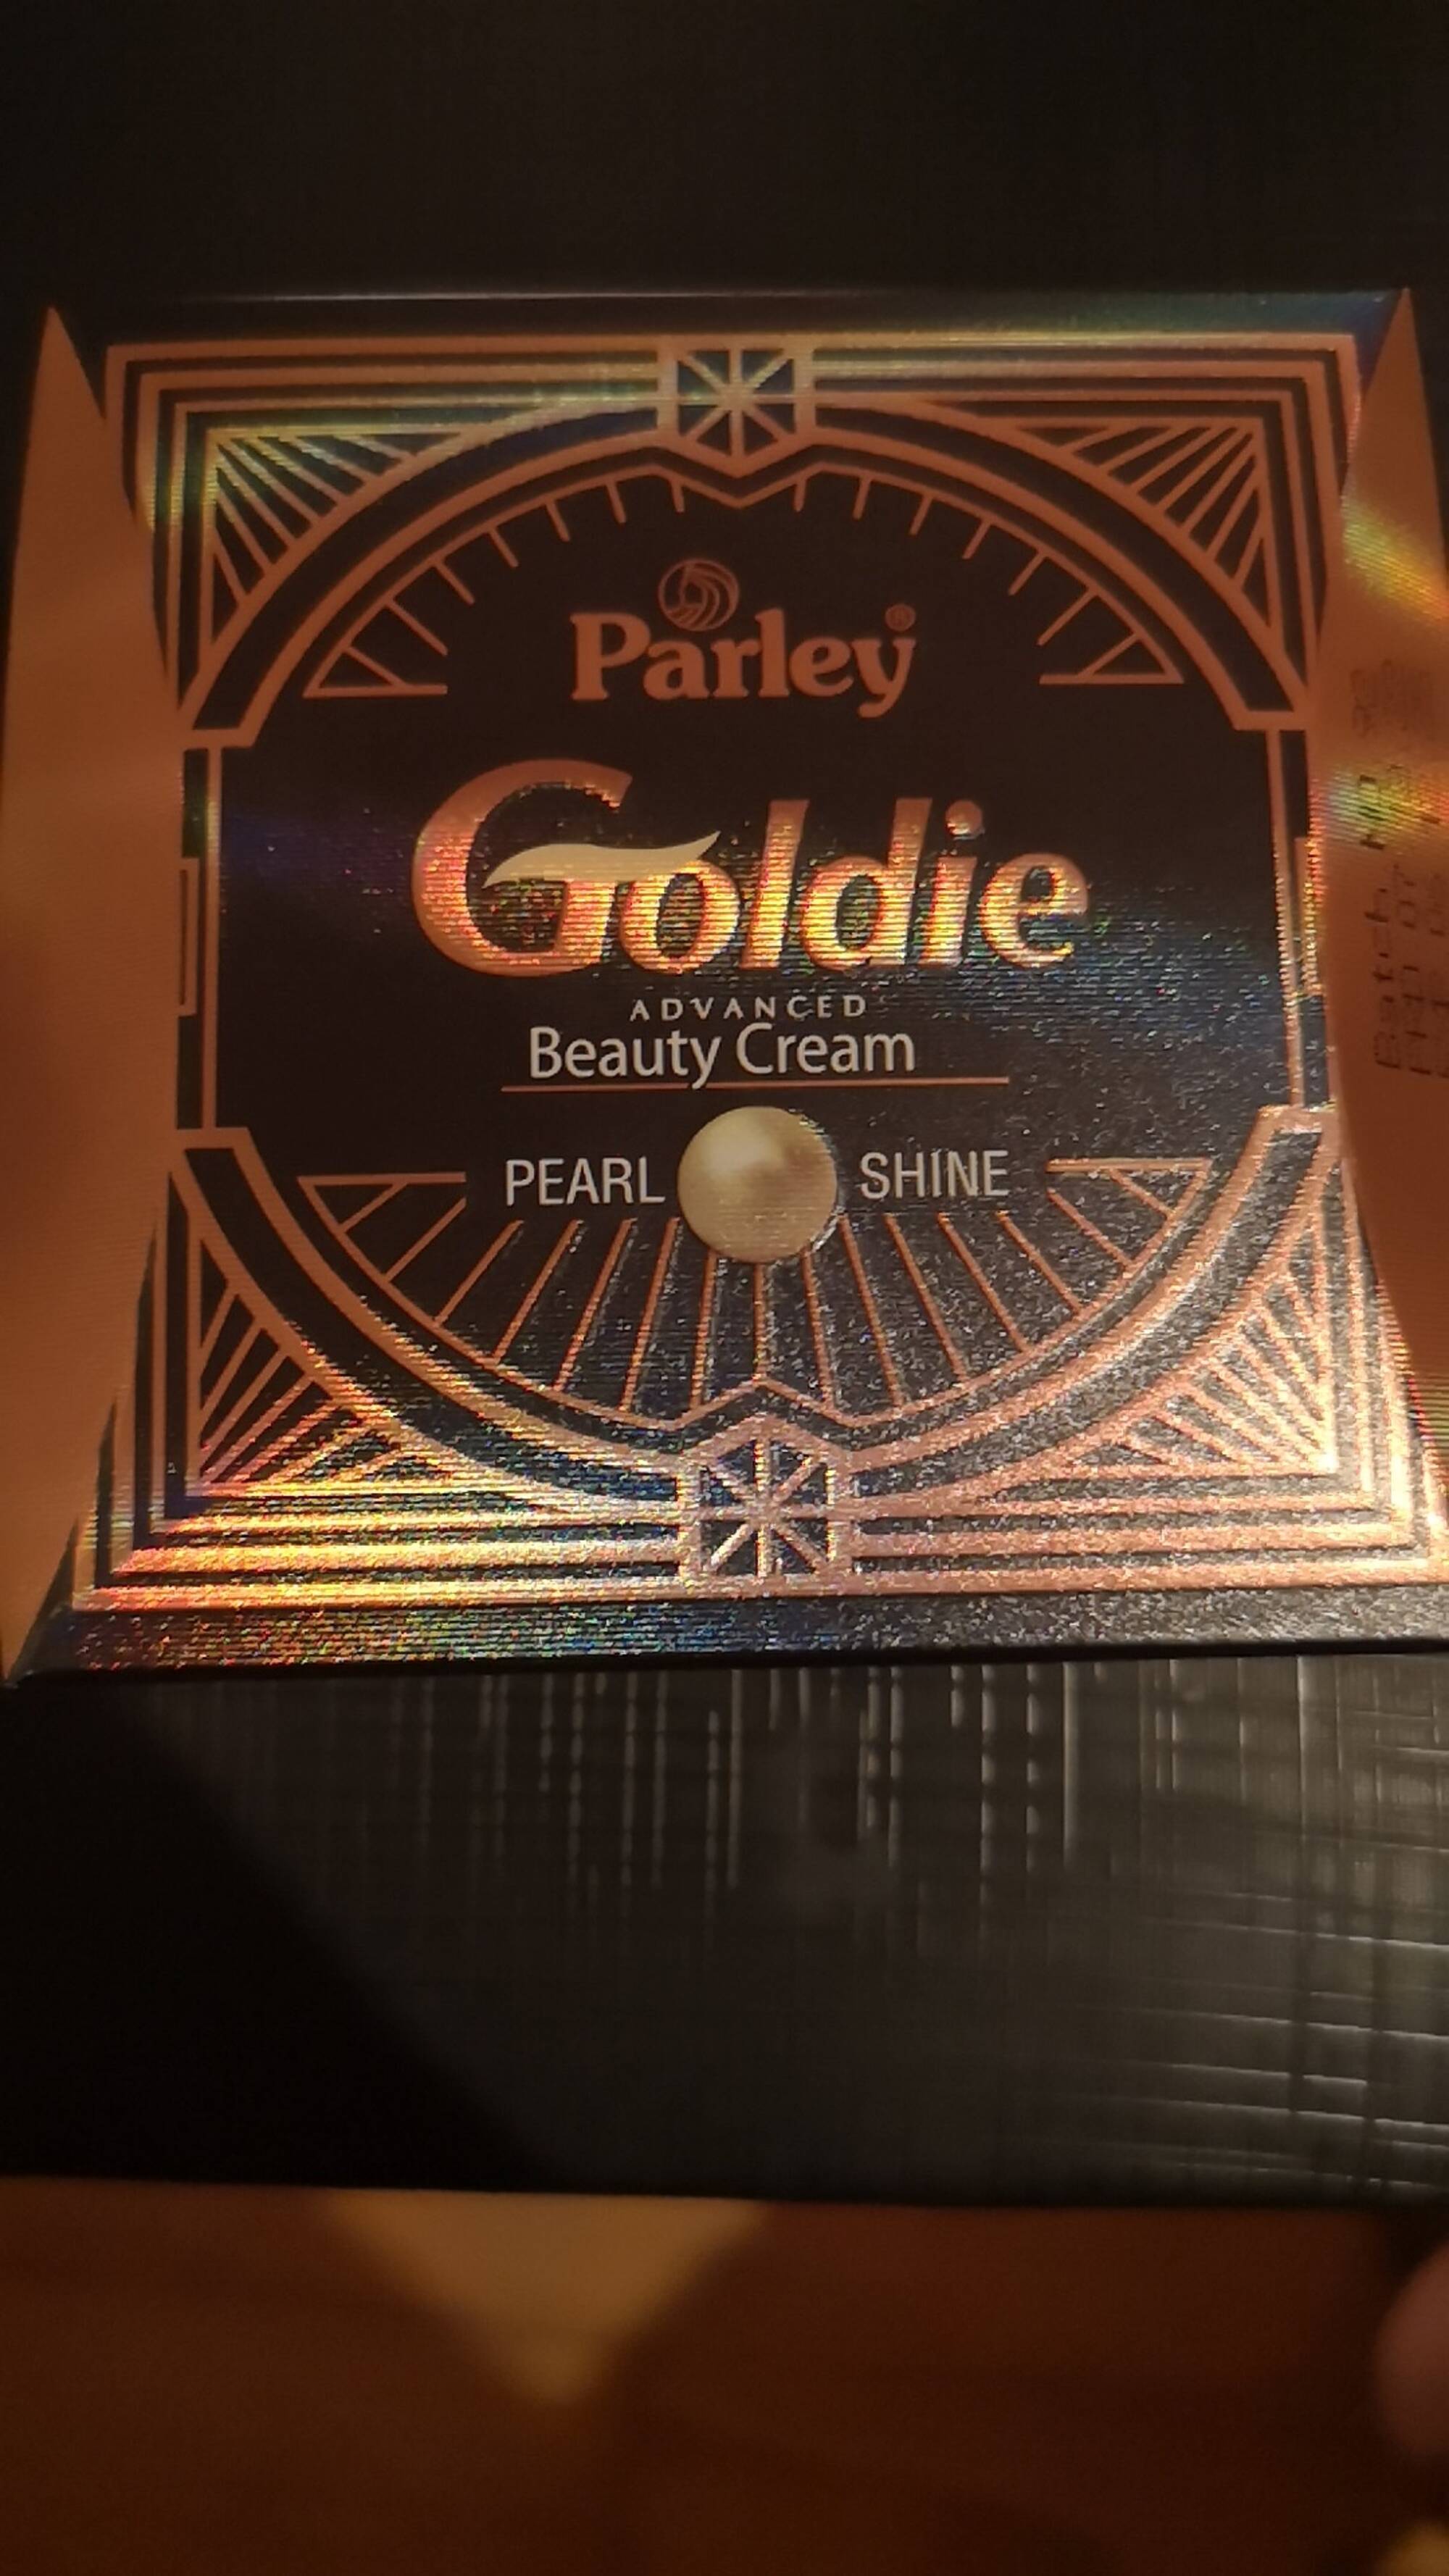 PARLEY - Goldie - Beauty cream